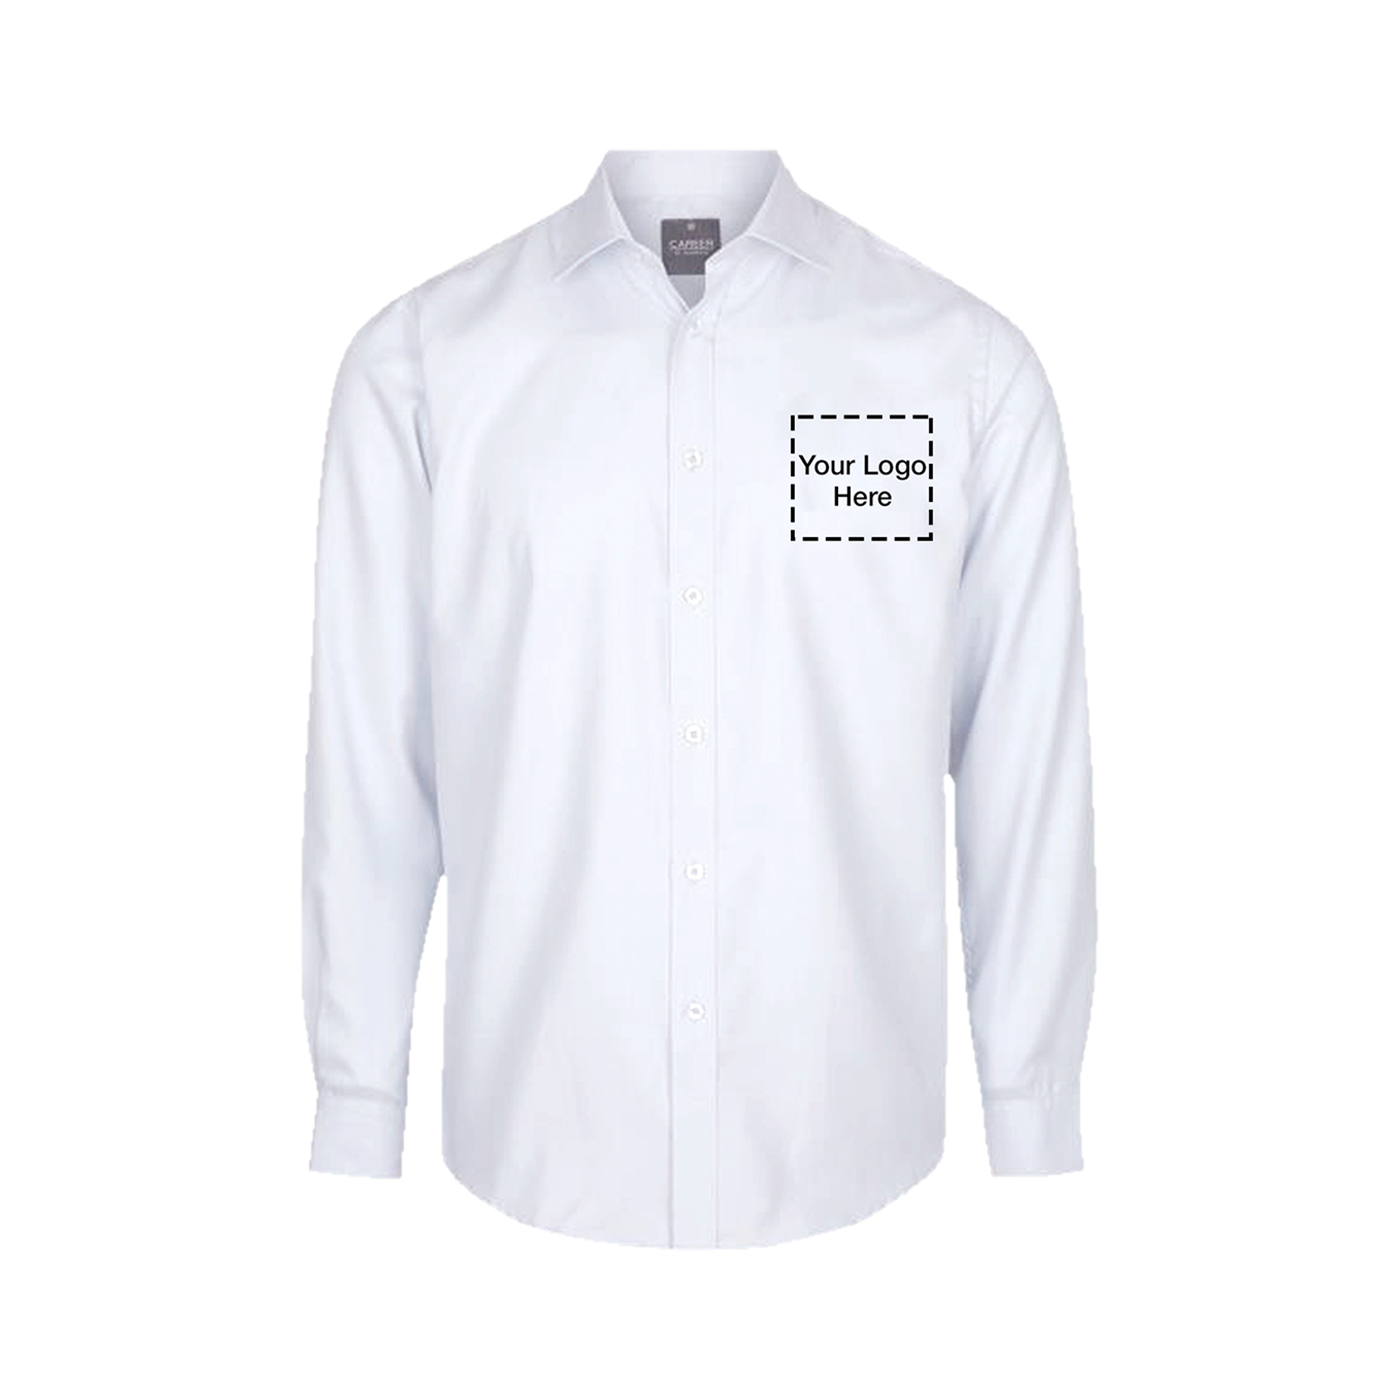 Co-branded Long Sleeve Shirt